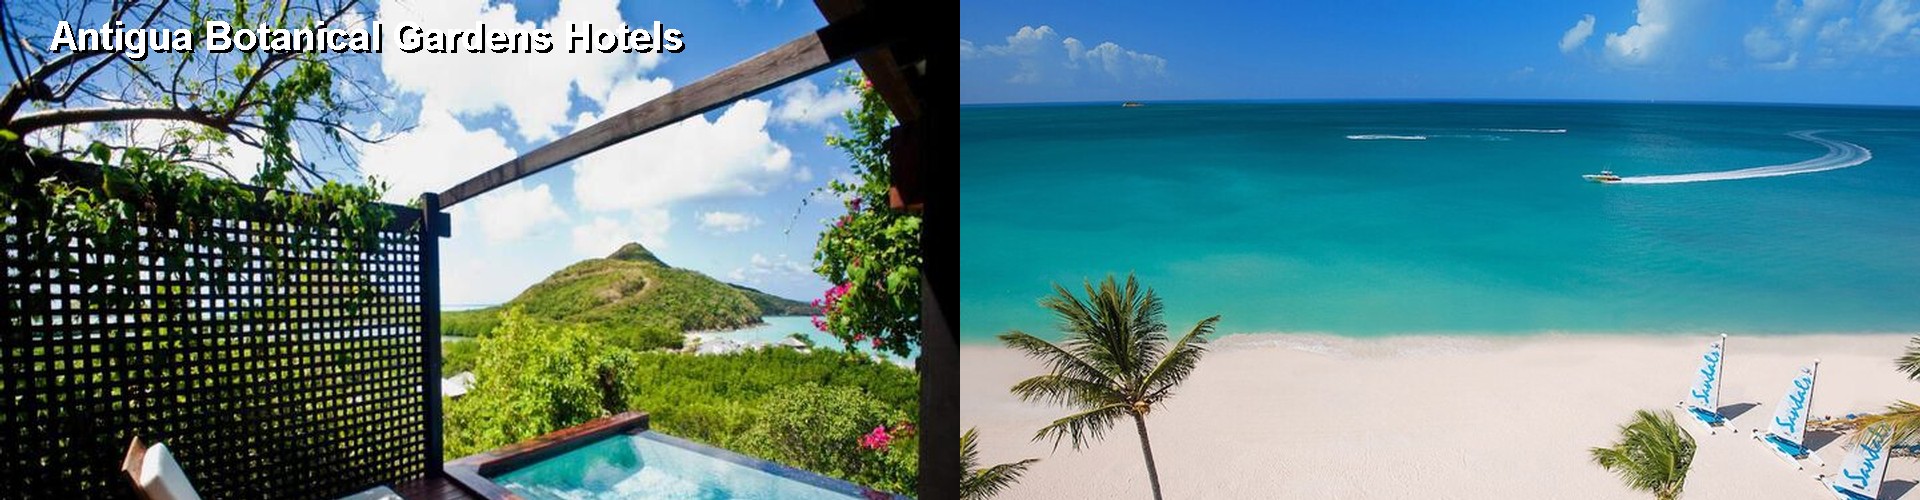 5 Best Hotels near Antigua Botanical Gardens